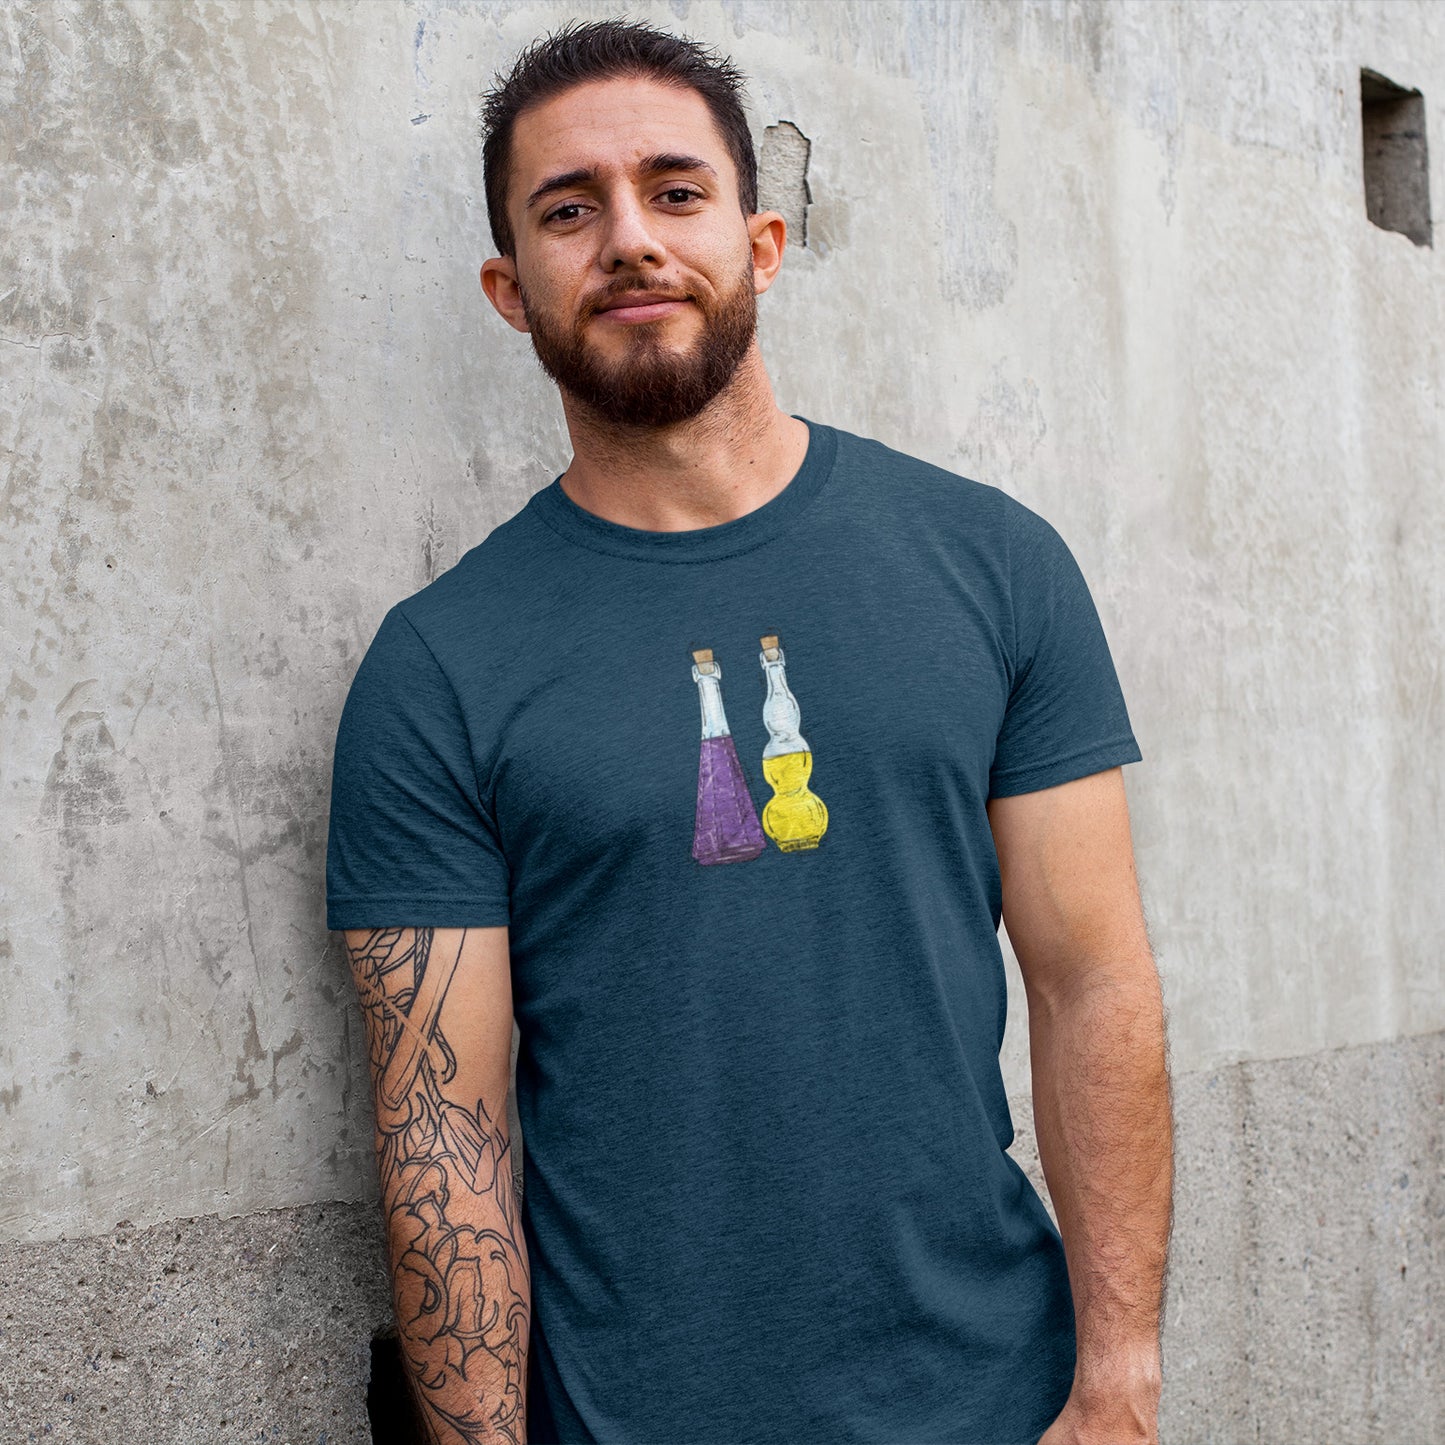 Intersex Pride Potion Bottles - Men's T-Shirt